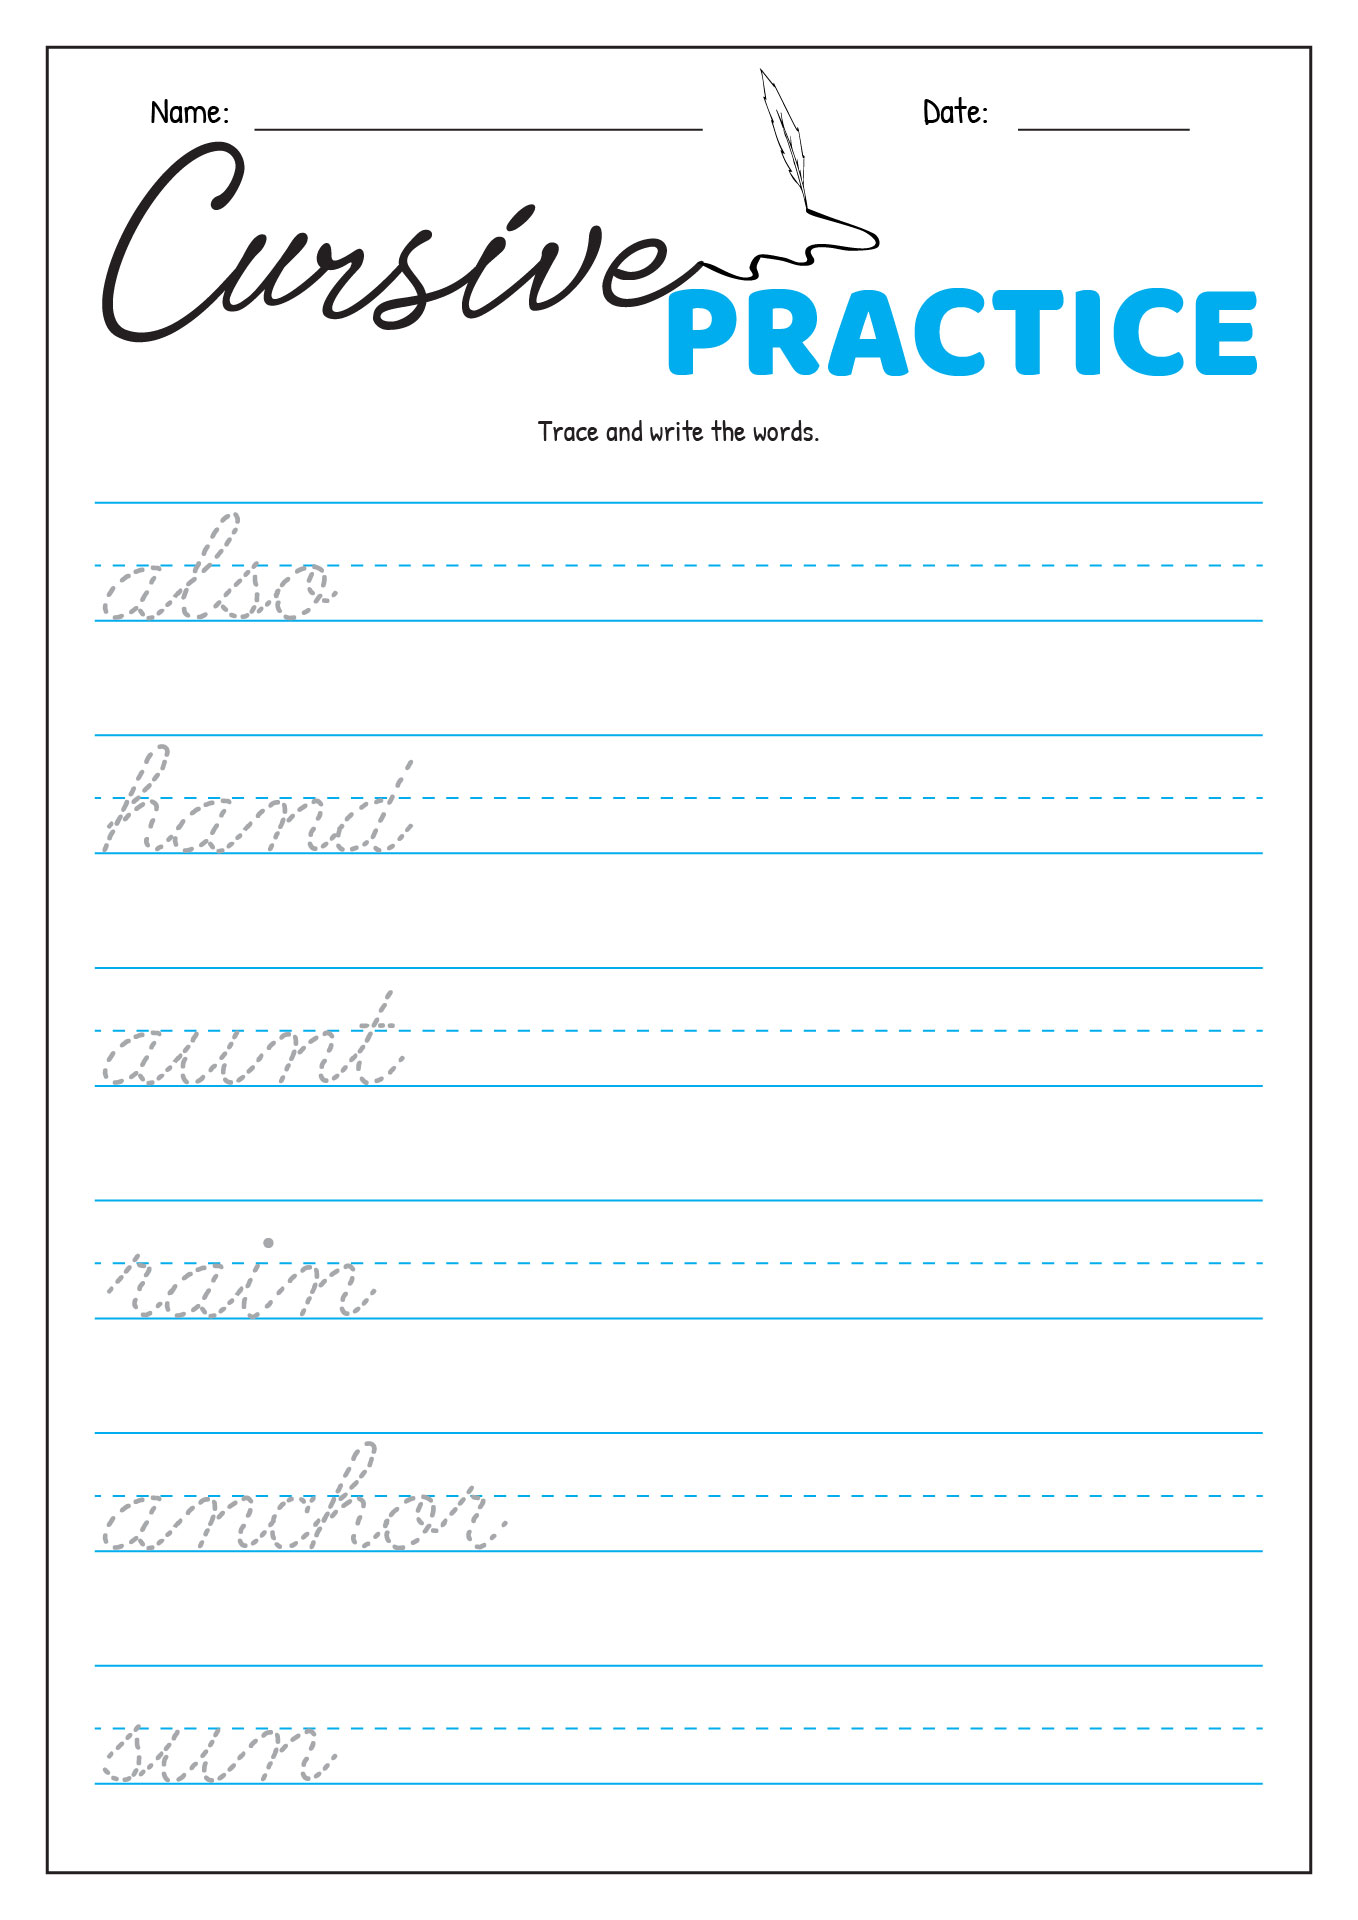 16 Best Images of Cursive Writing Worksheets For 3rd Grade ...